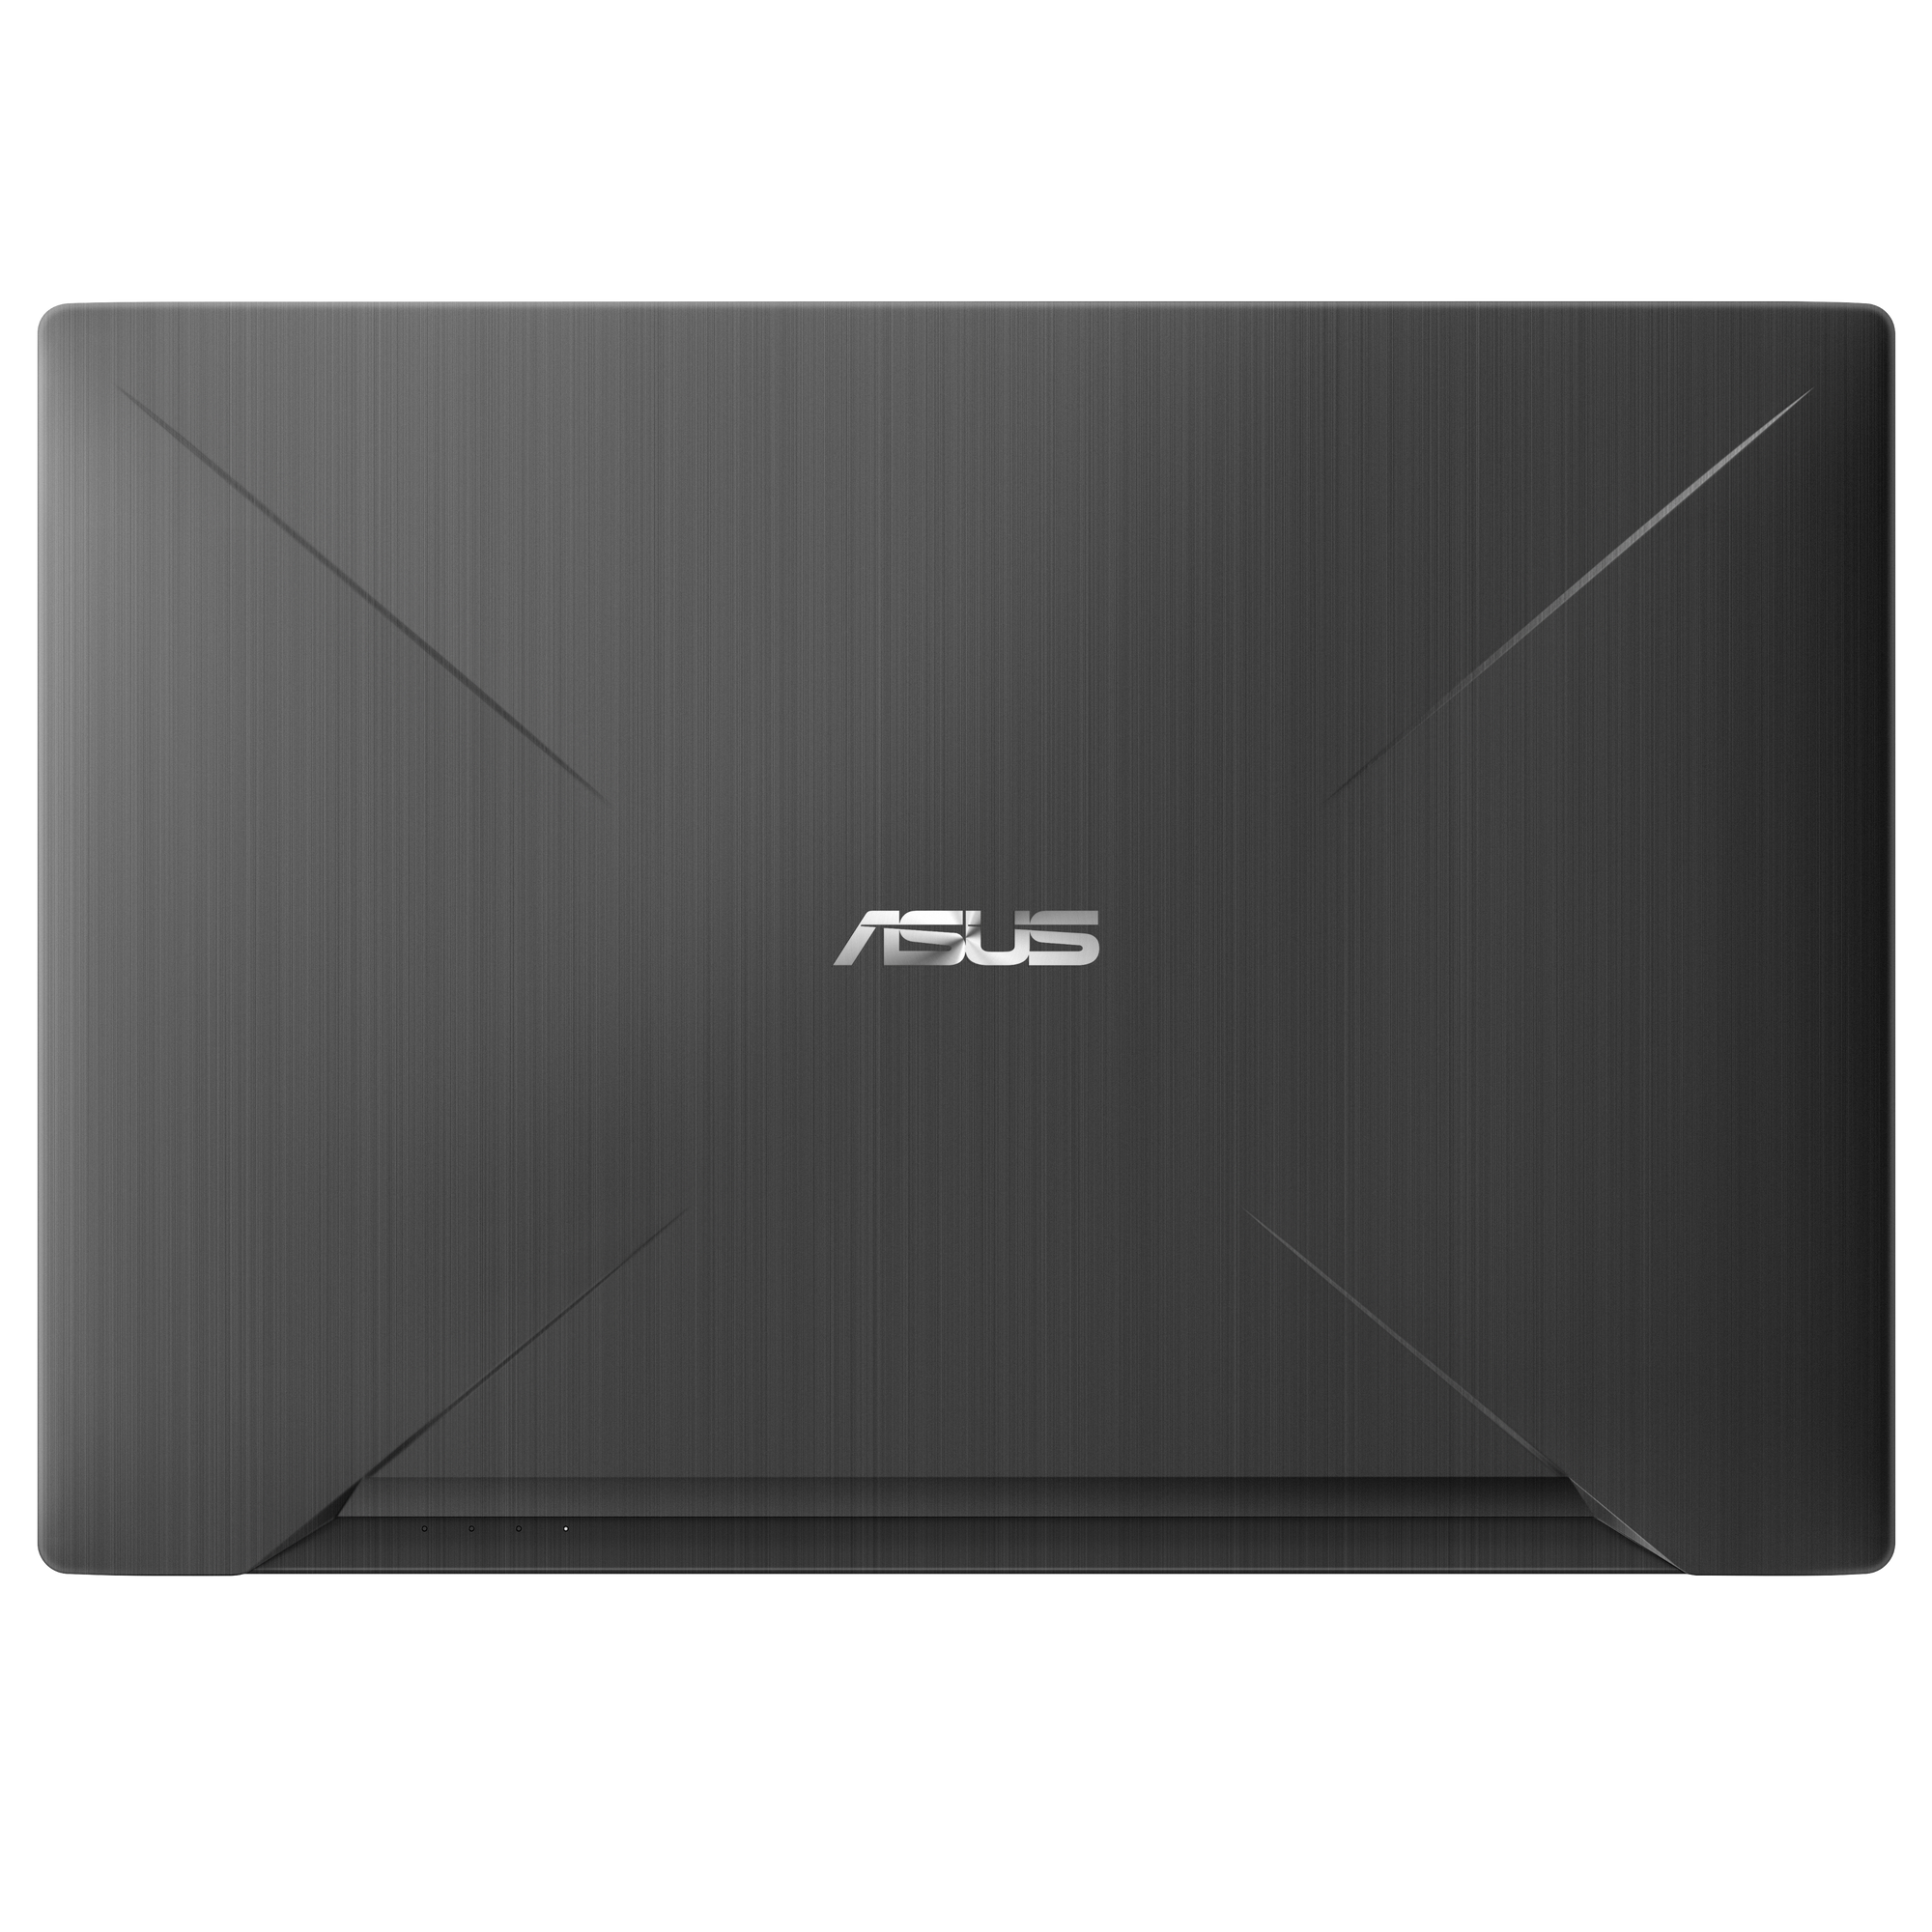 ASUS ROG FX503VD-EH73 | Laptops | XOTIC PC